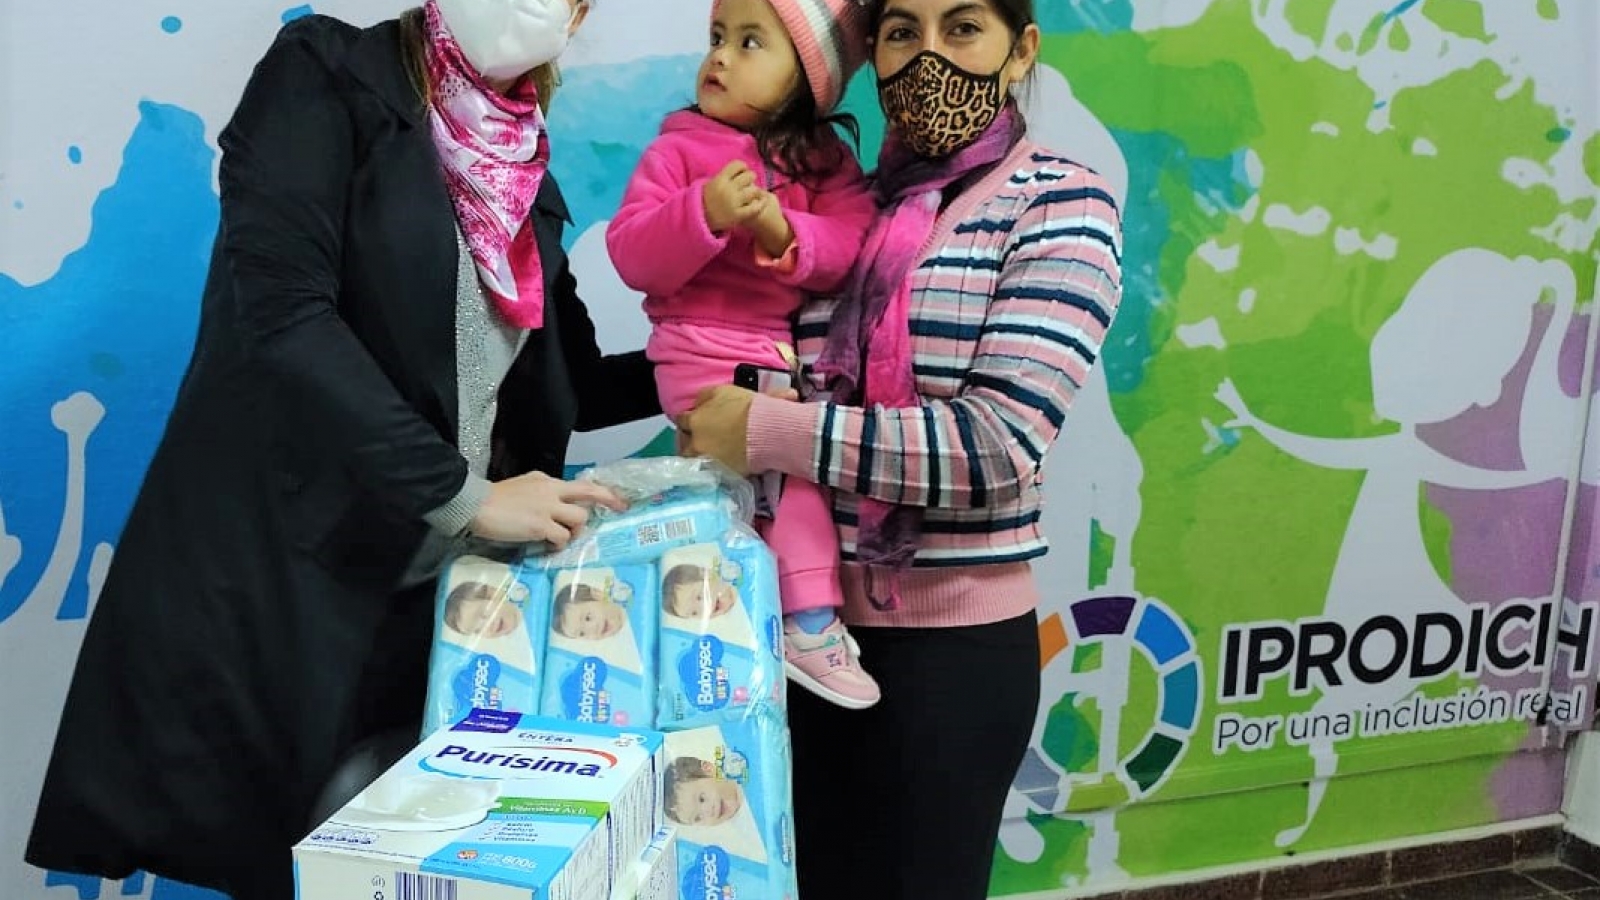 Equipo del IPRODICH entregando packs de leche en polvo a beneficiaria